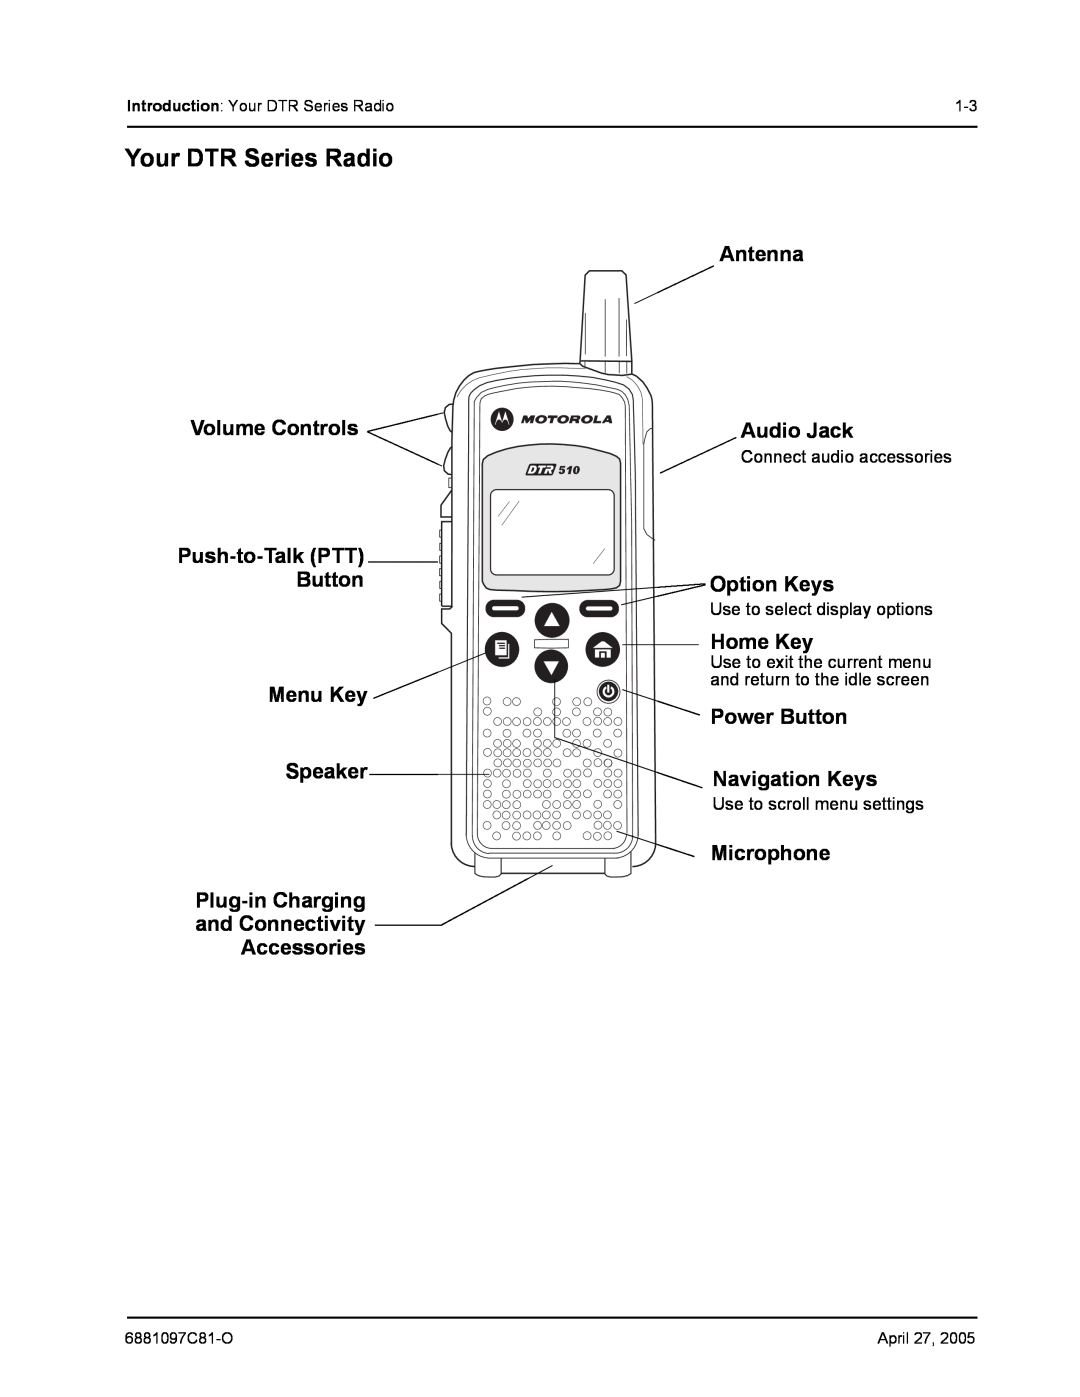 Motorola DTR510 Your DTR Series Radio, Antenna, Volume Controls, Audio Jack, and Connectivity Accessories, Option Keys 